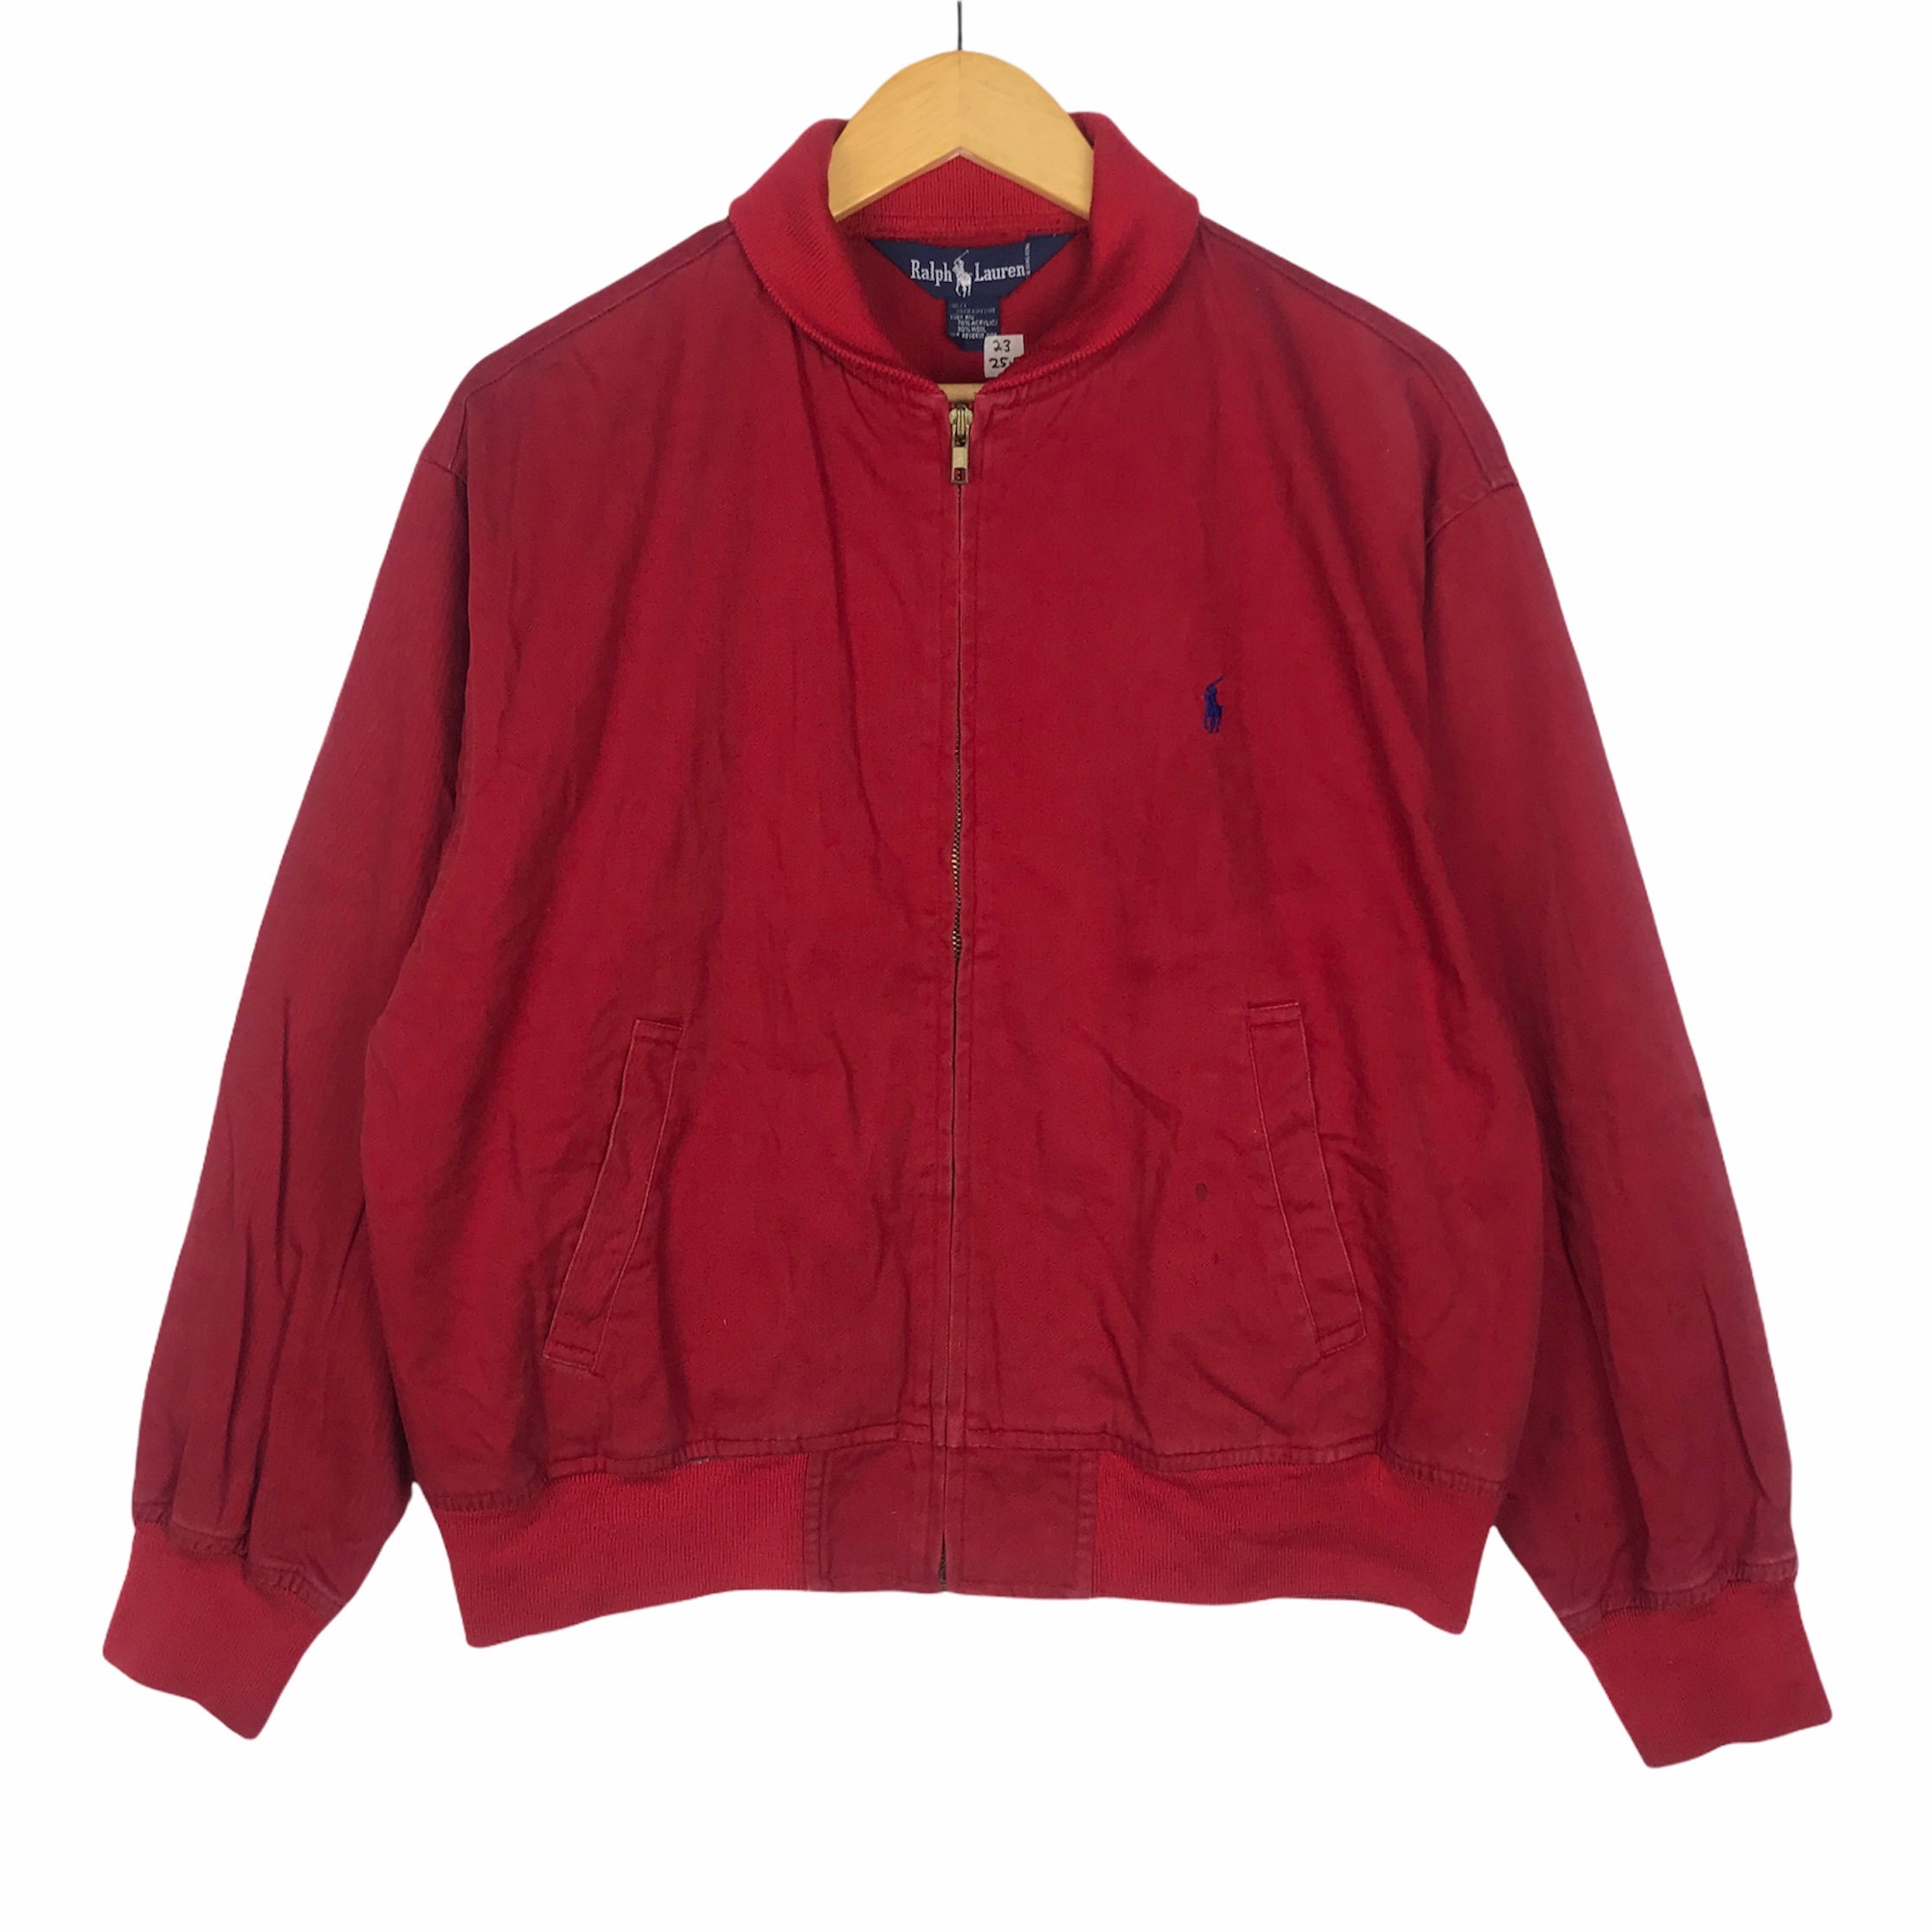 Rare Vintage 90s Polo Ralph Lauren Harrington Jacket / Red / Large / Avs4 -   Canada